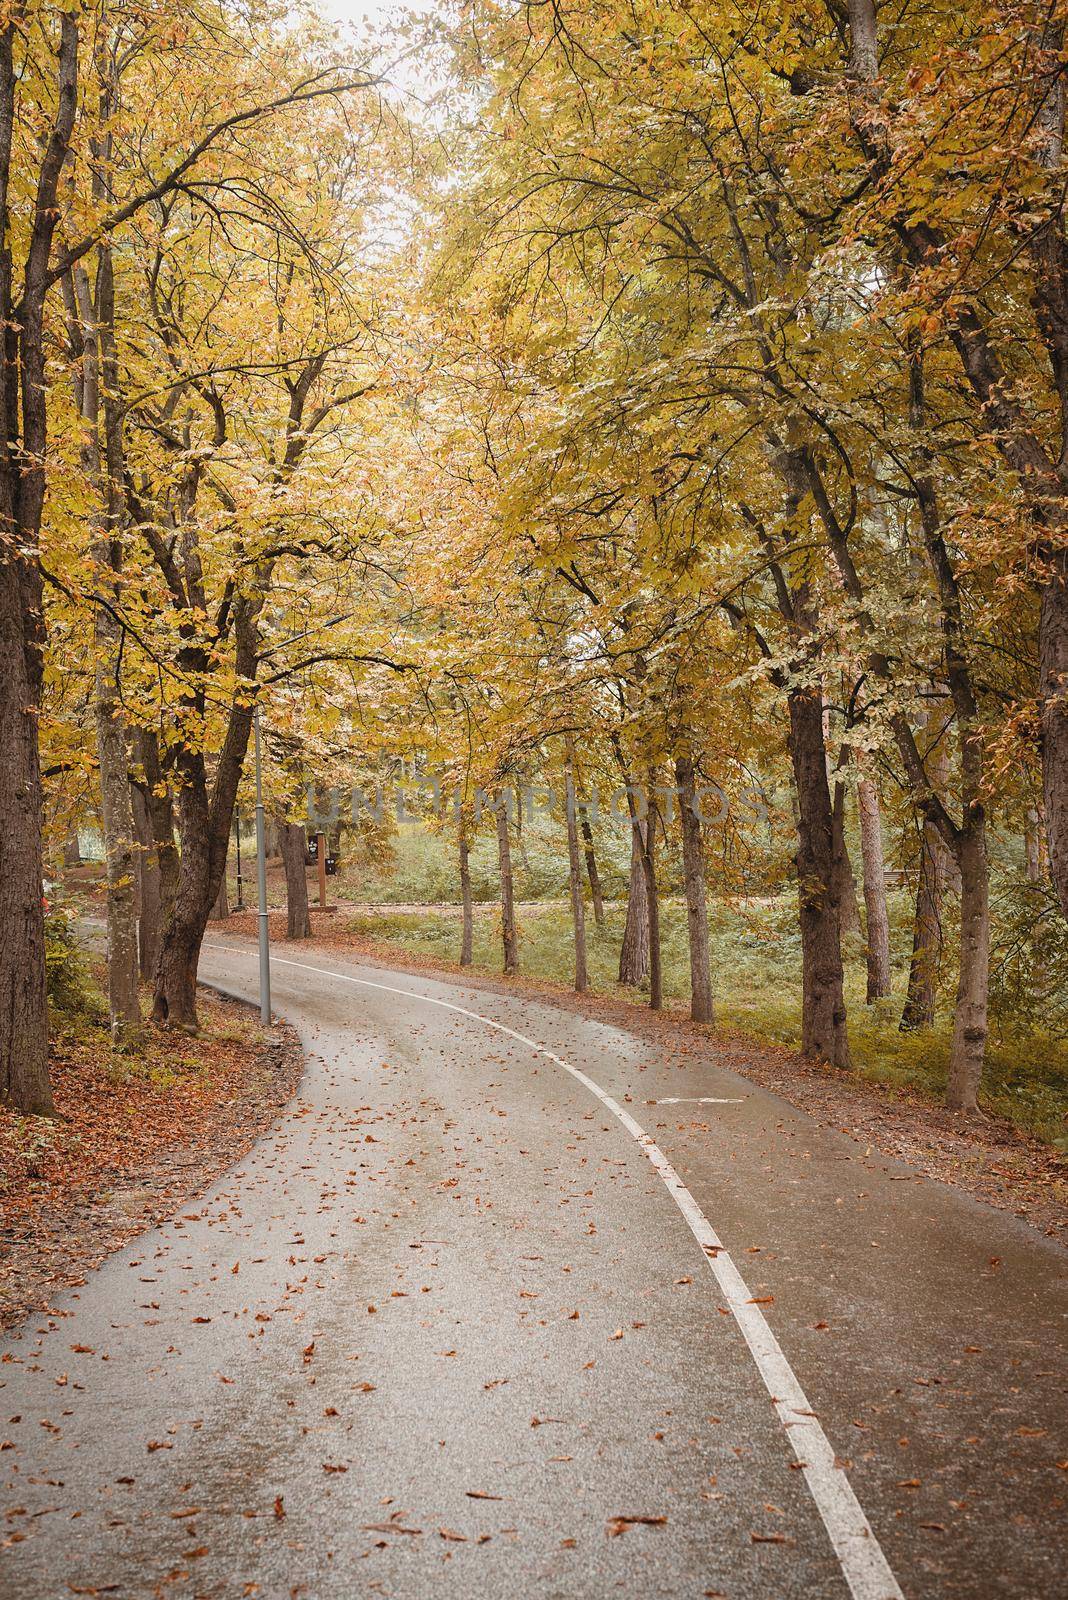 road in autumn forest by Desperada